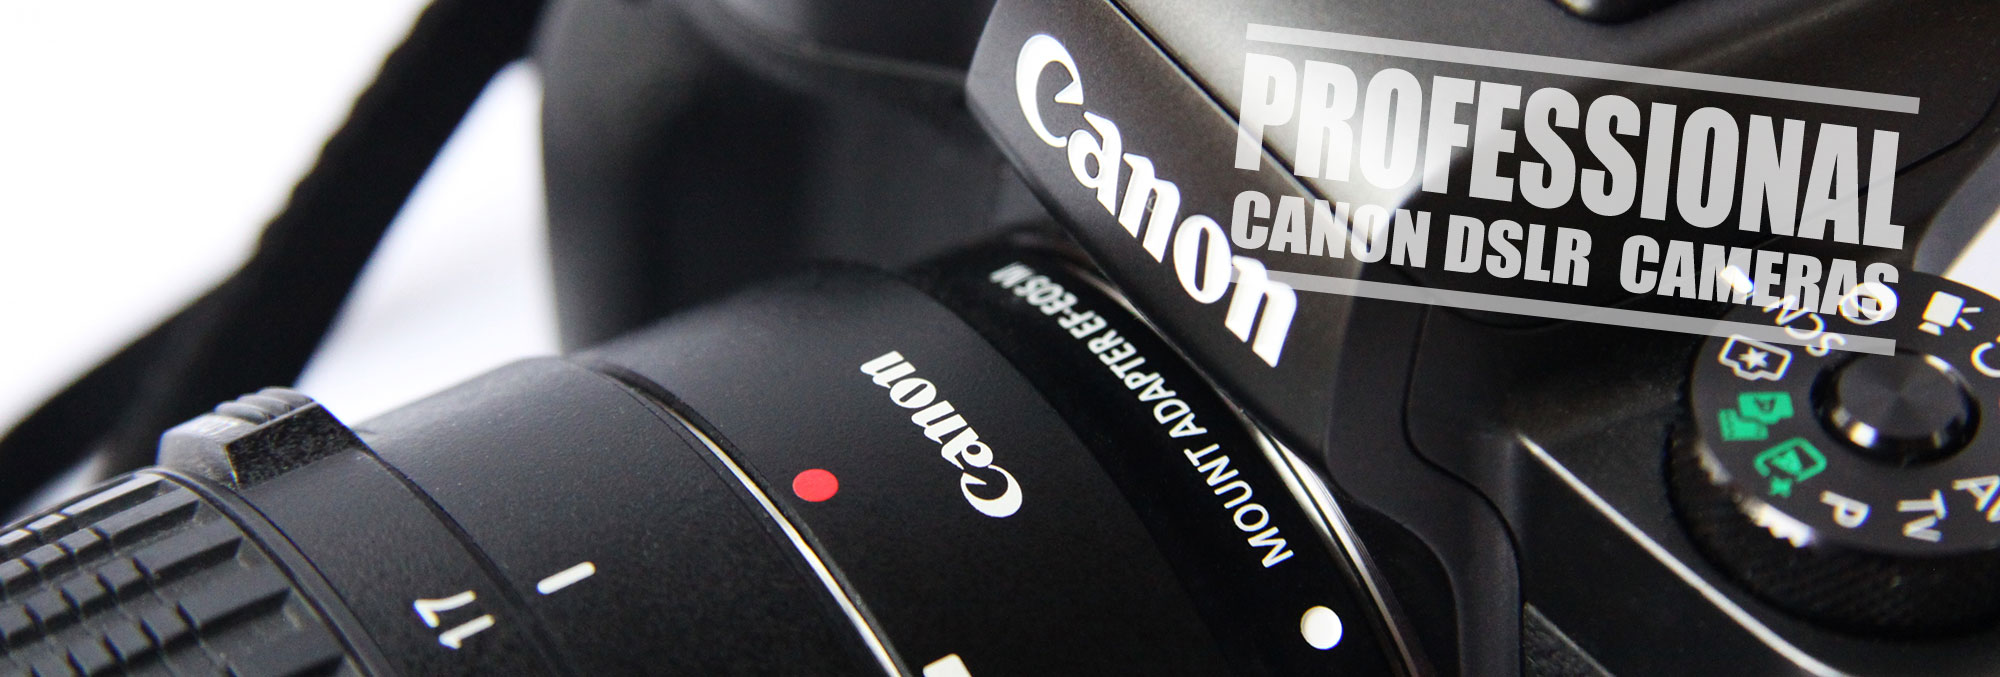 best canon digital professional cameras